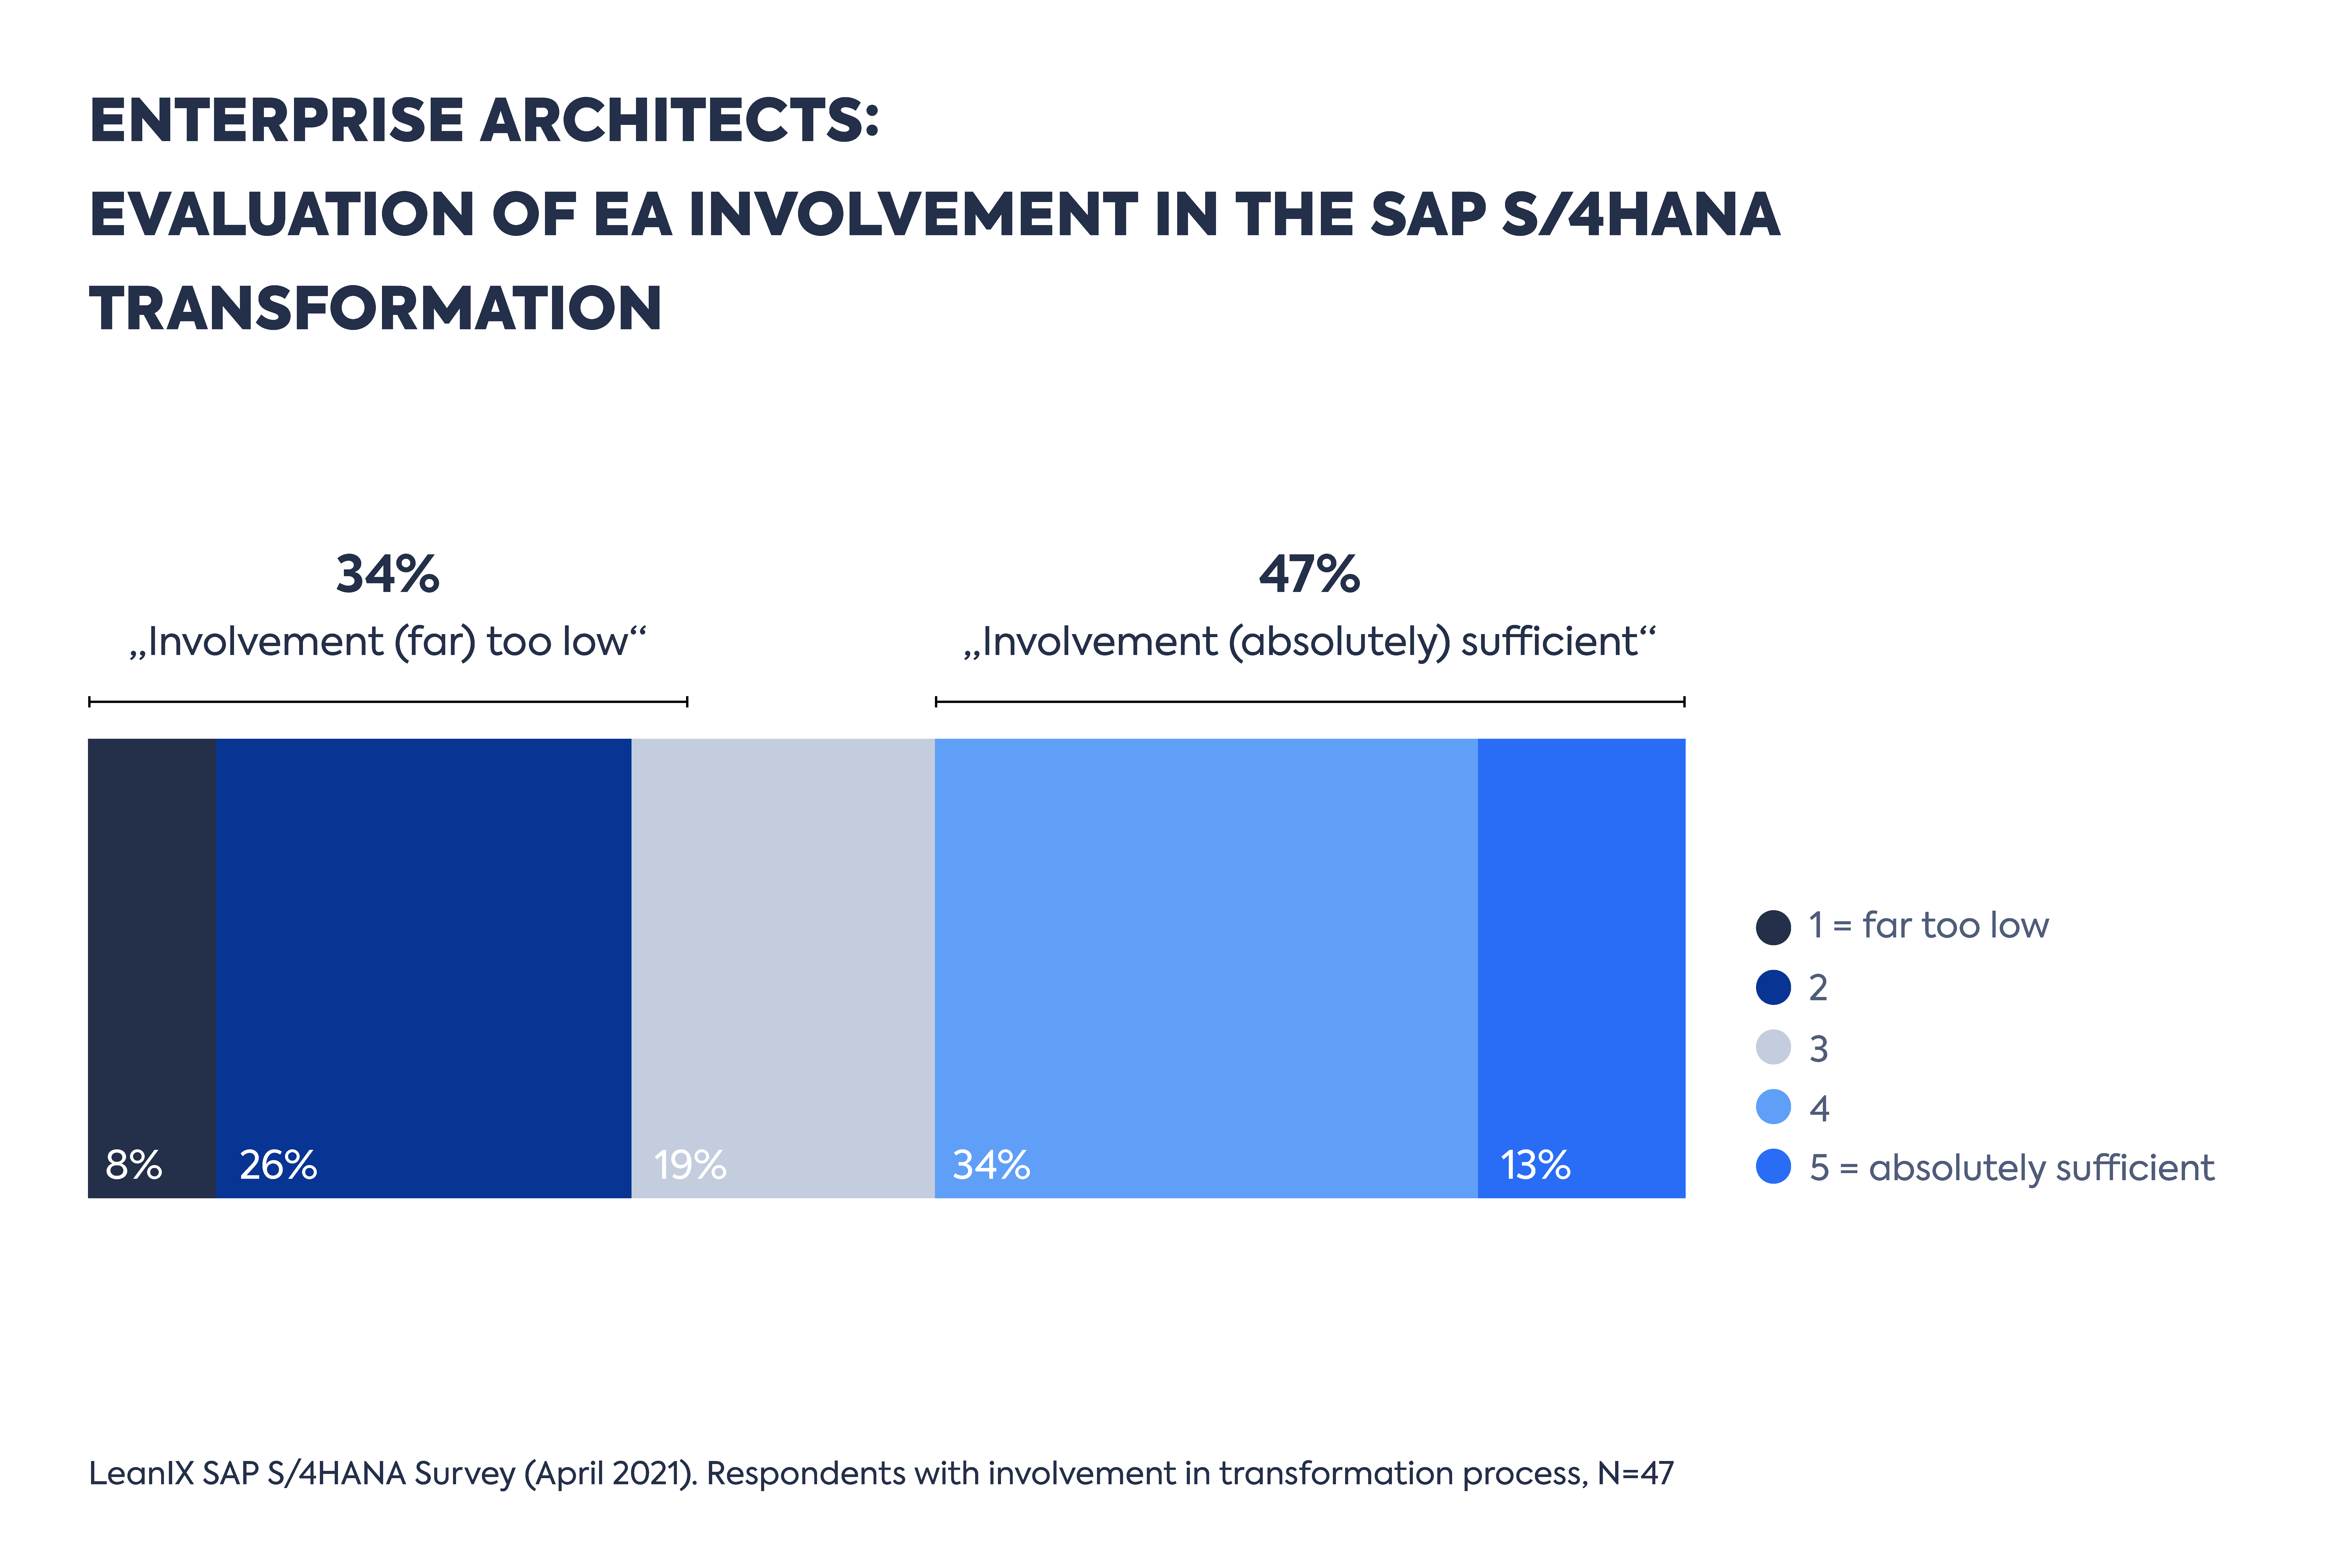 Evaluation of EA Involvement in the SAP S/HANA Transformation